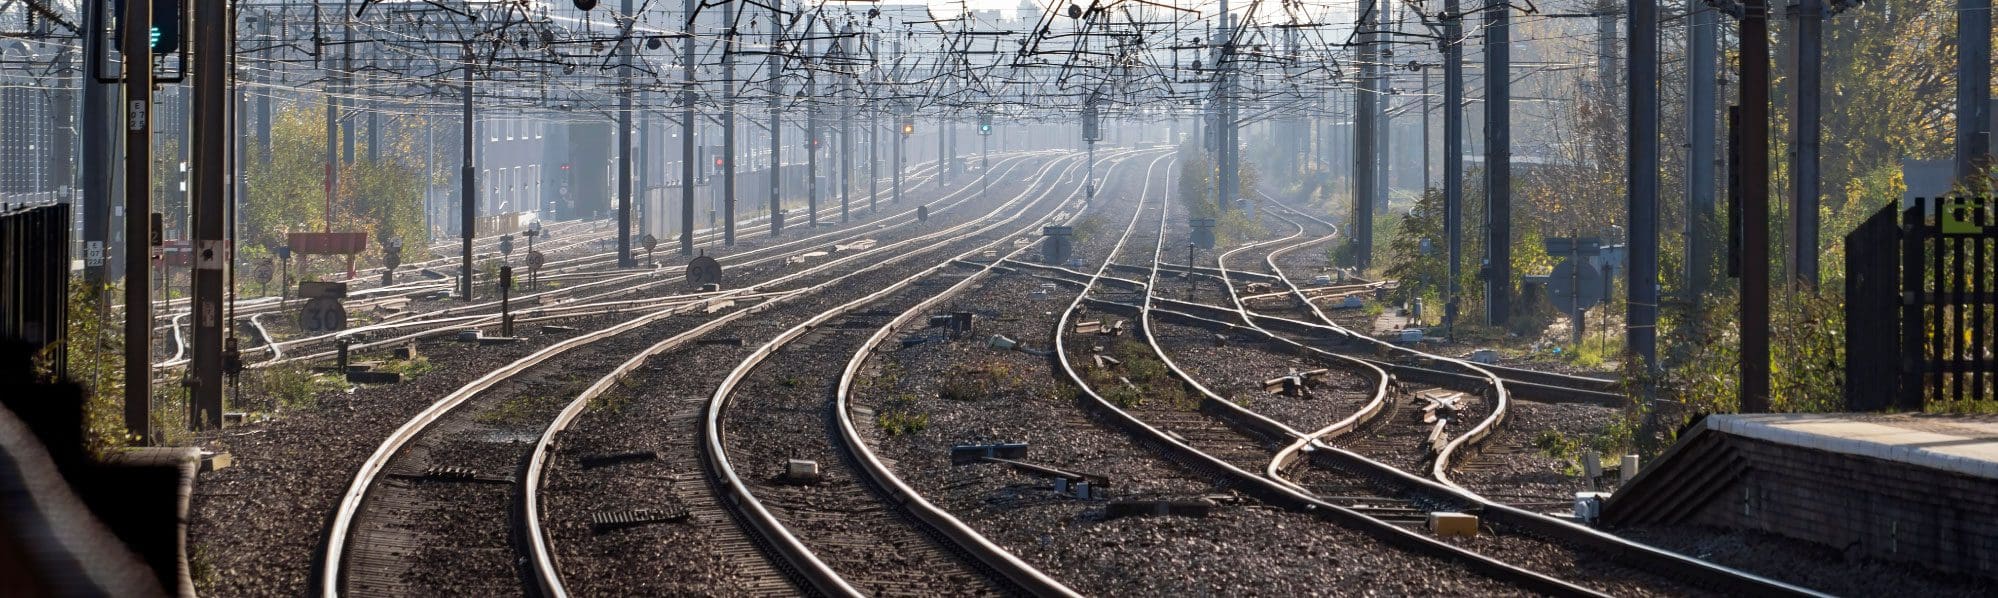 Railway tracks and overhead wiring